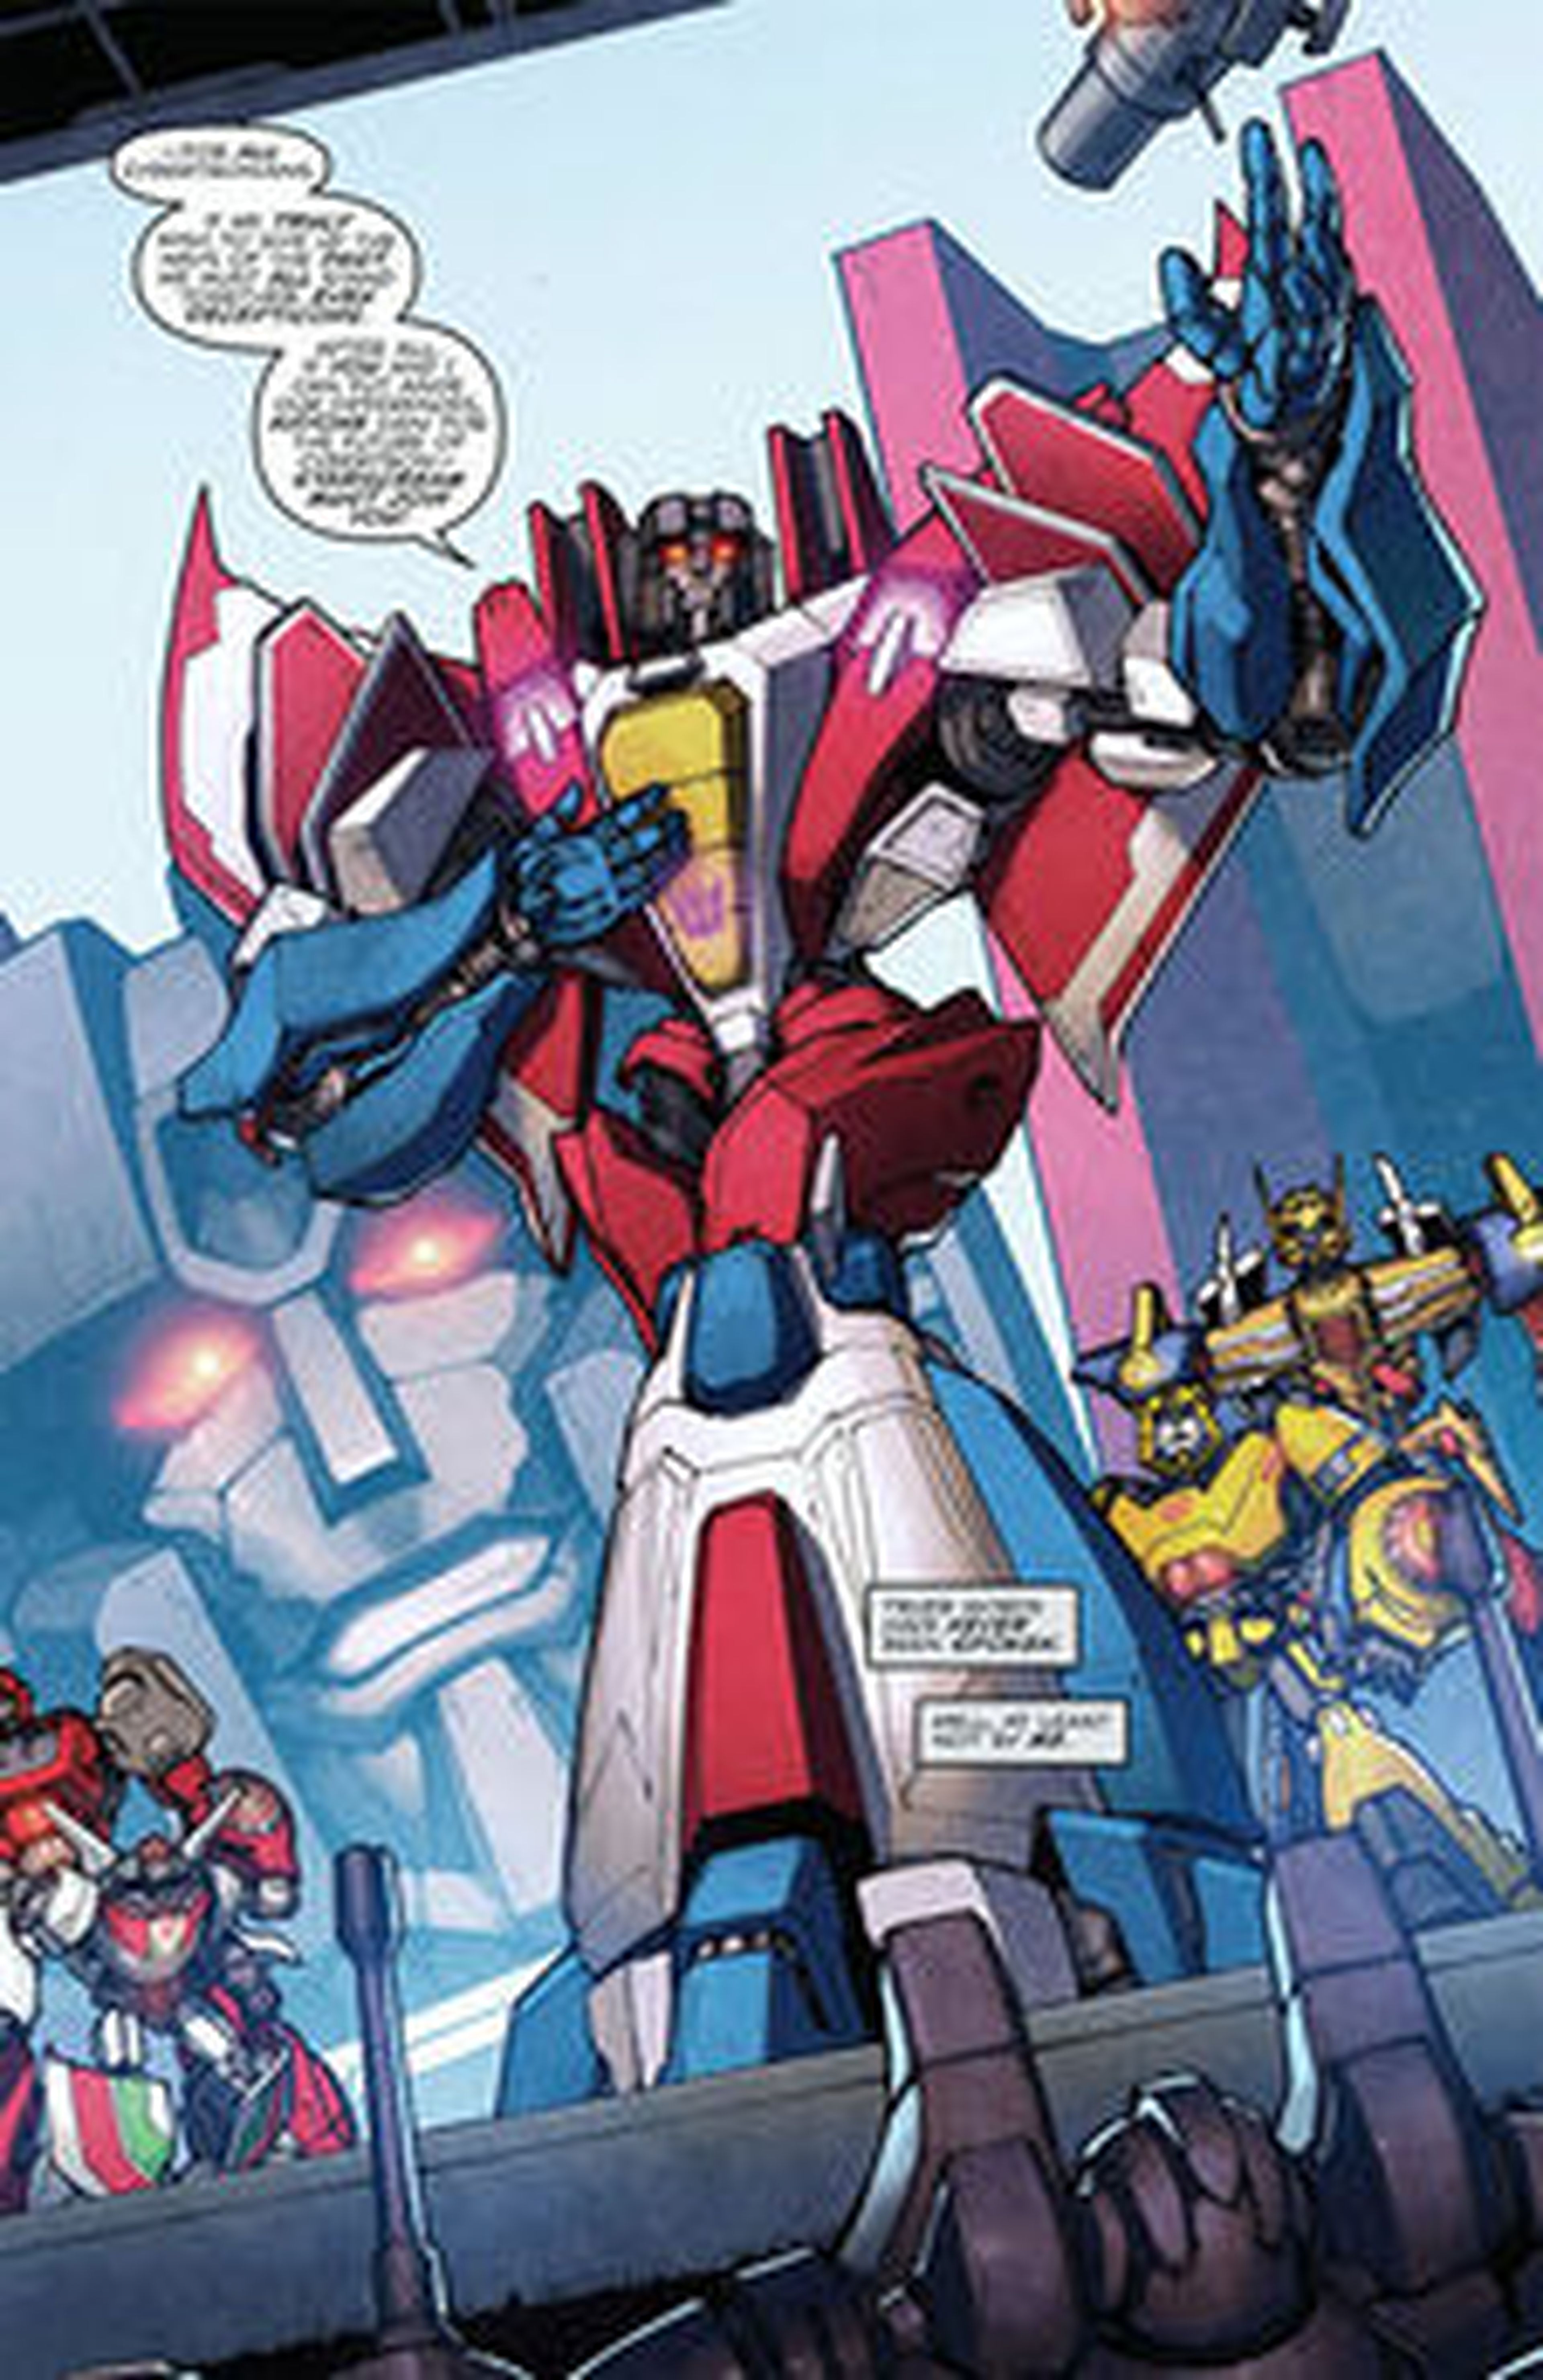 Transformers: Robots in Disguise - Review de un cómic que tenéis que leer